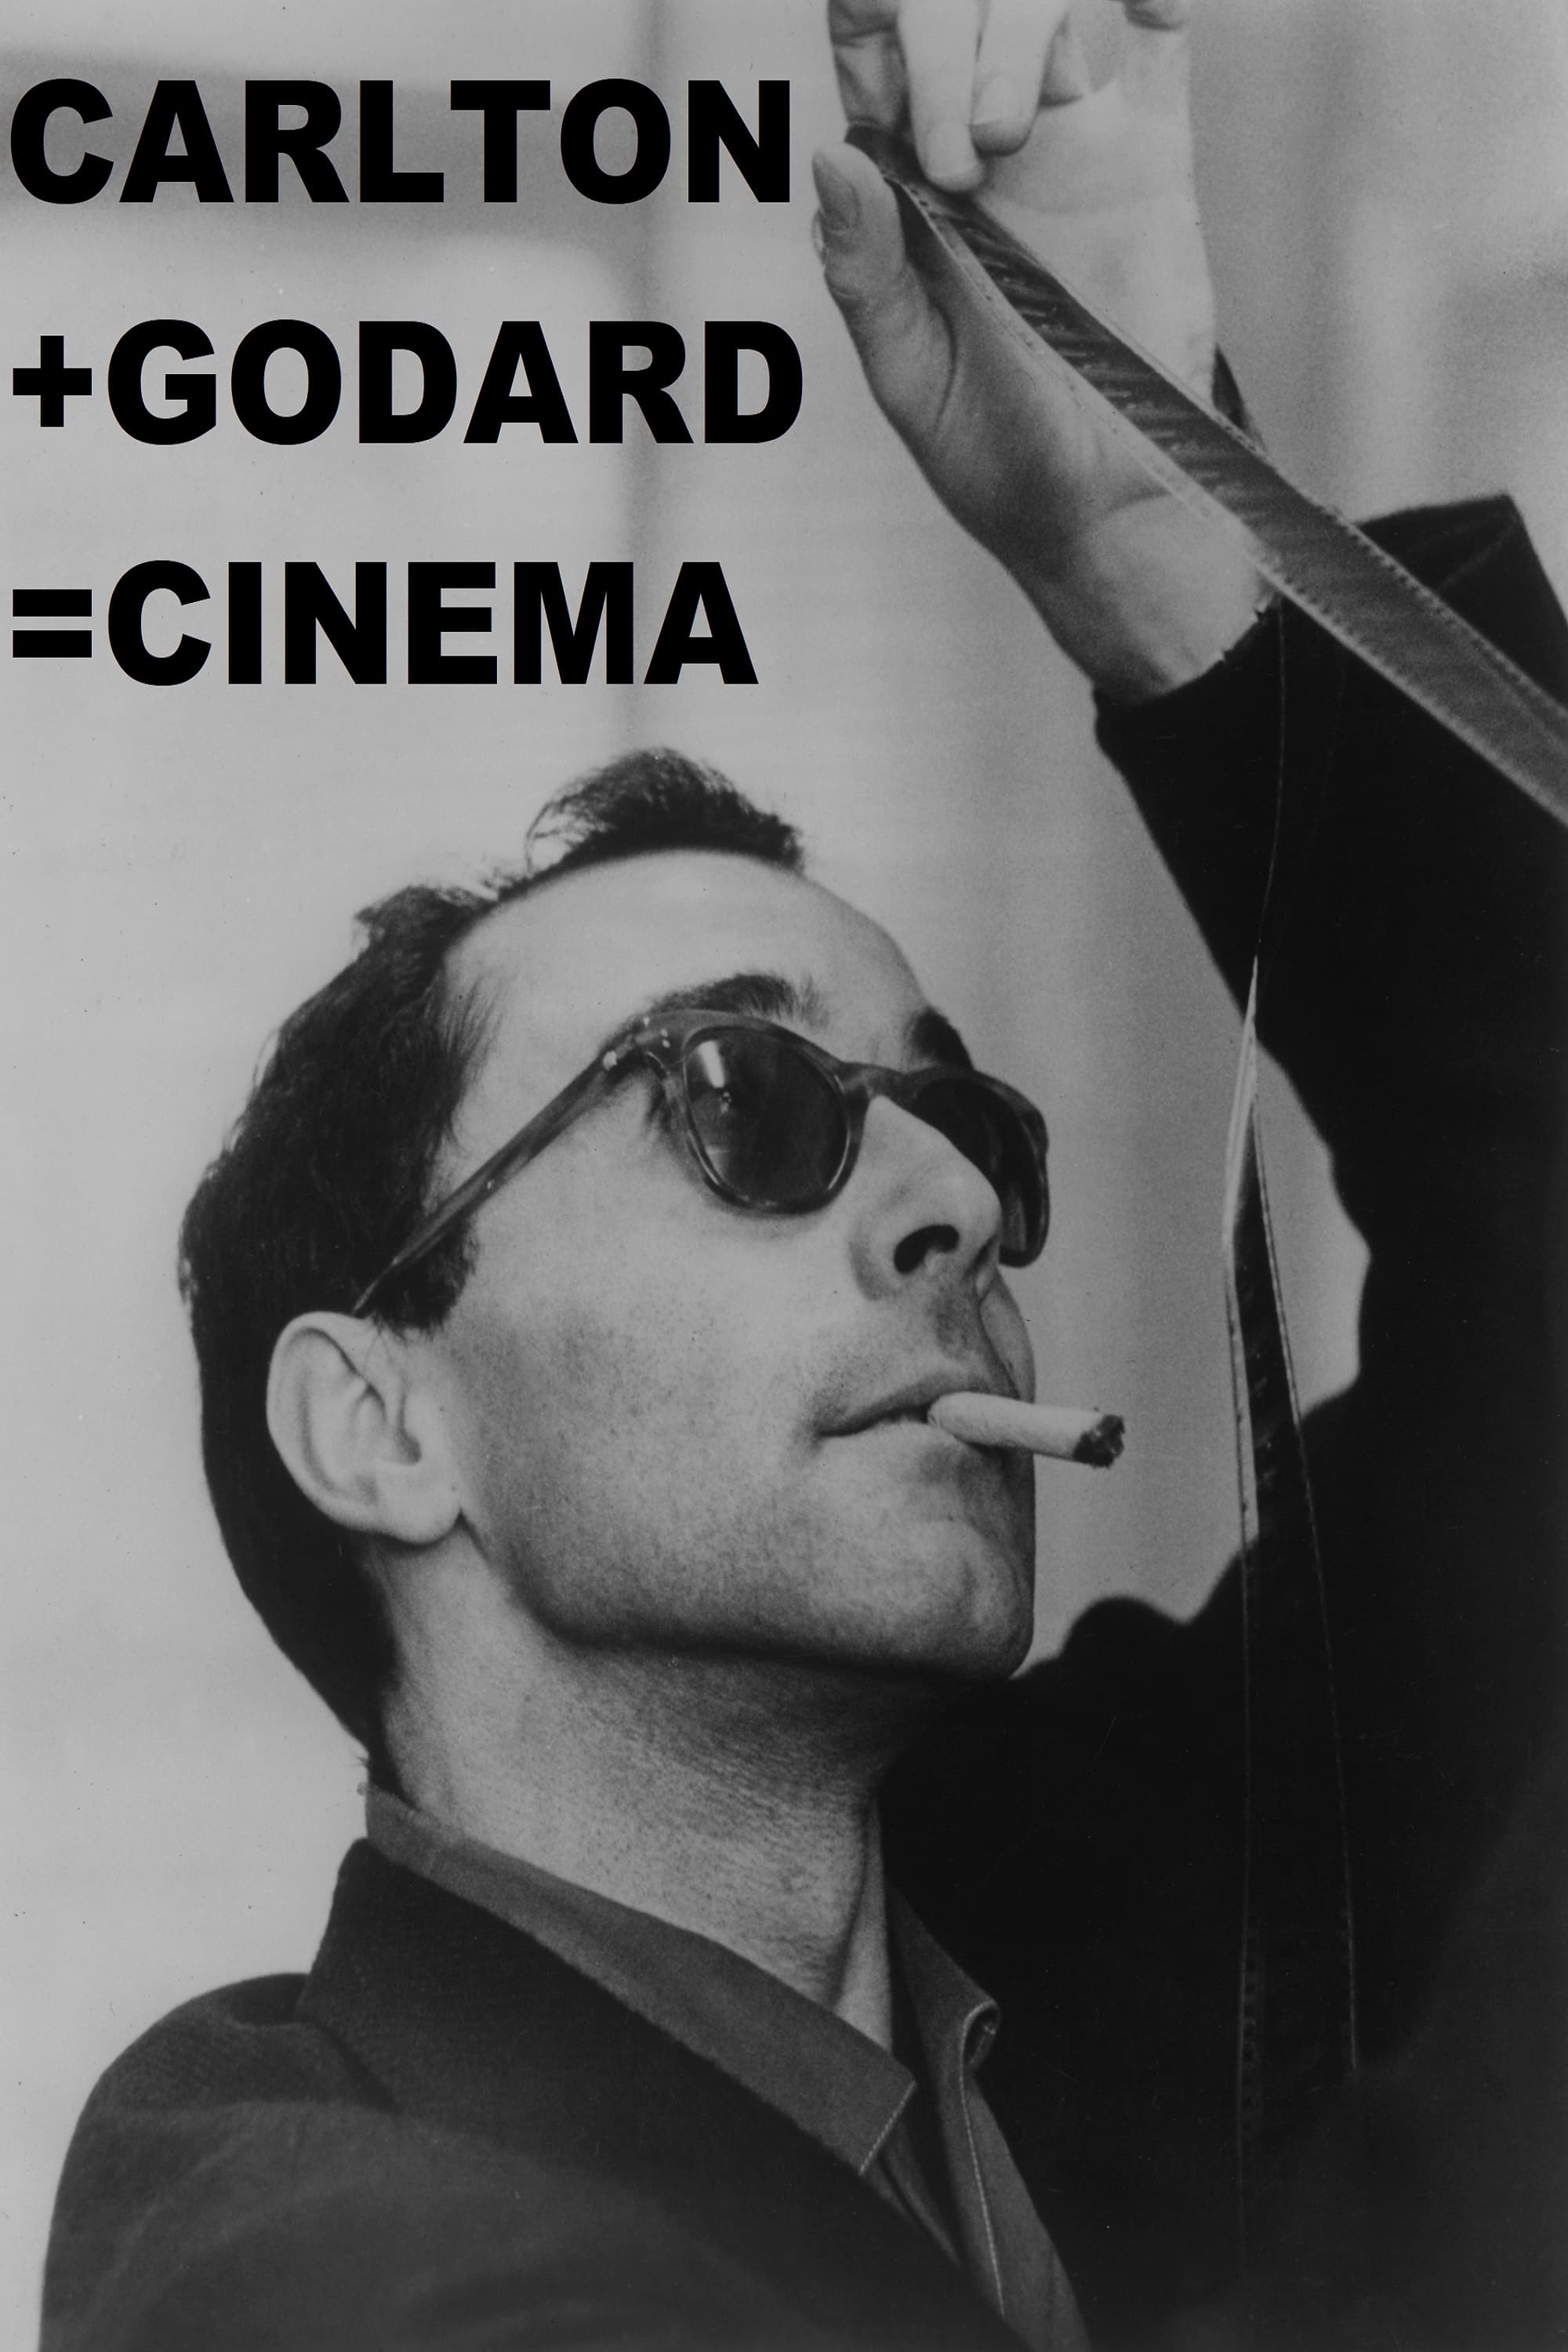 Carlton + Godard = Cinema